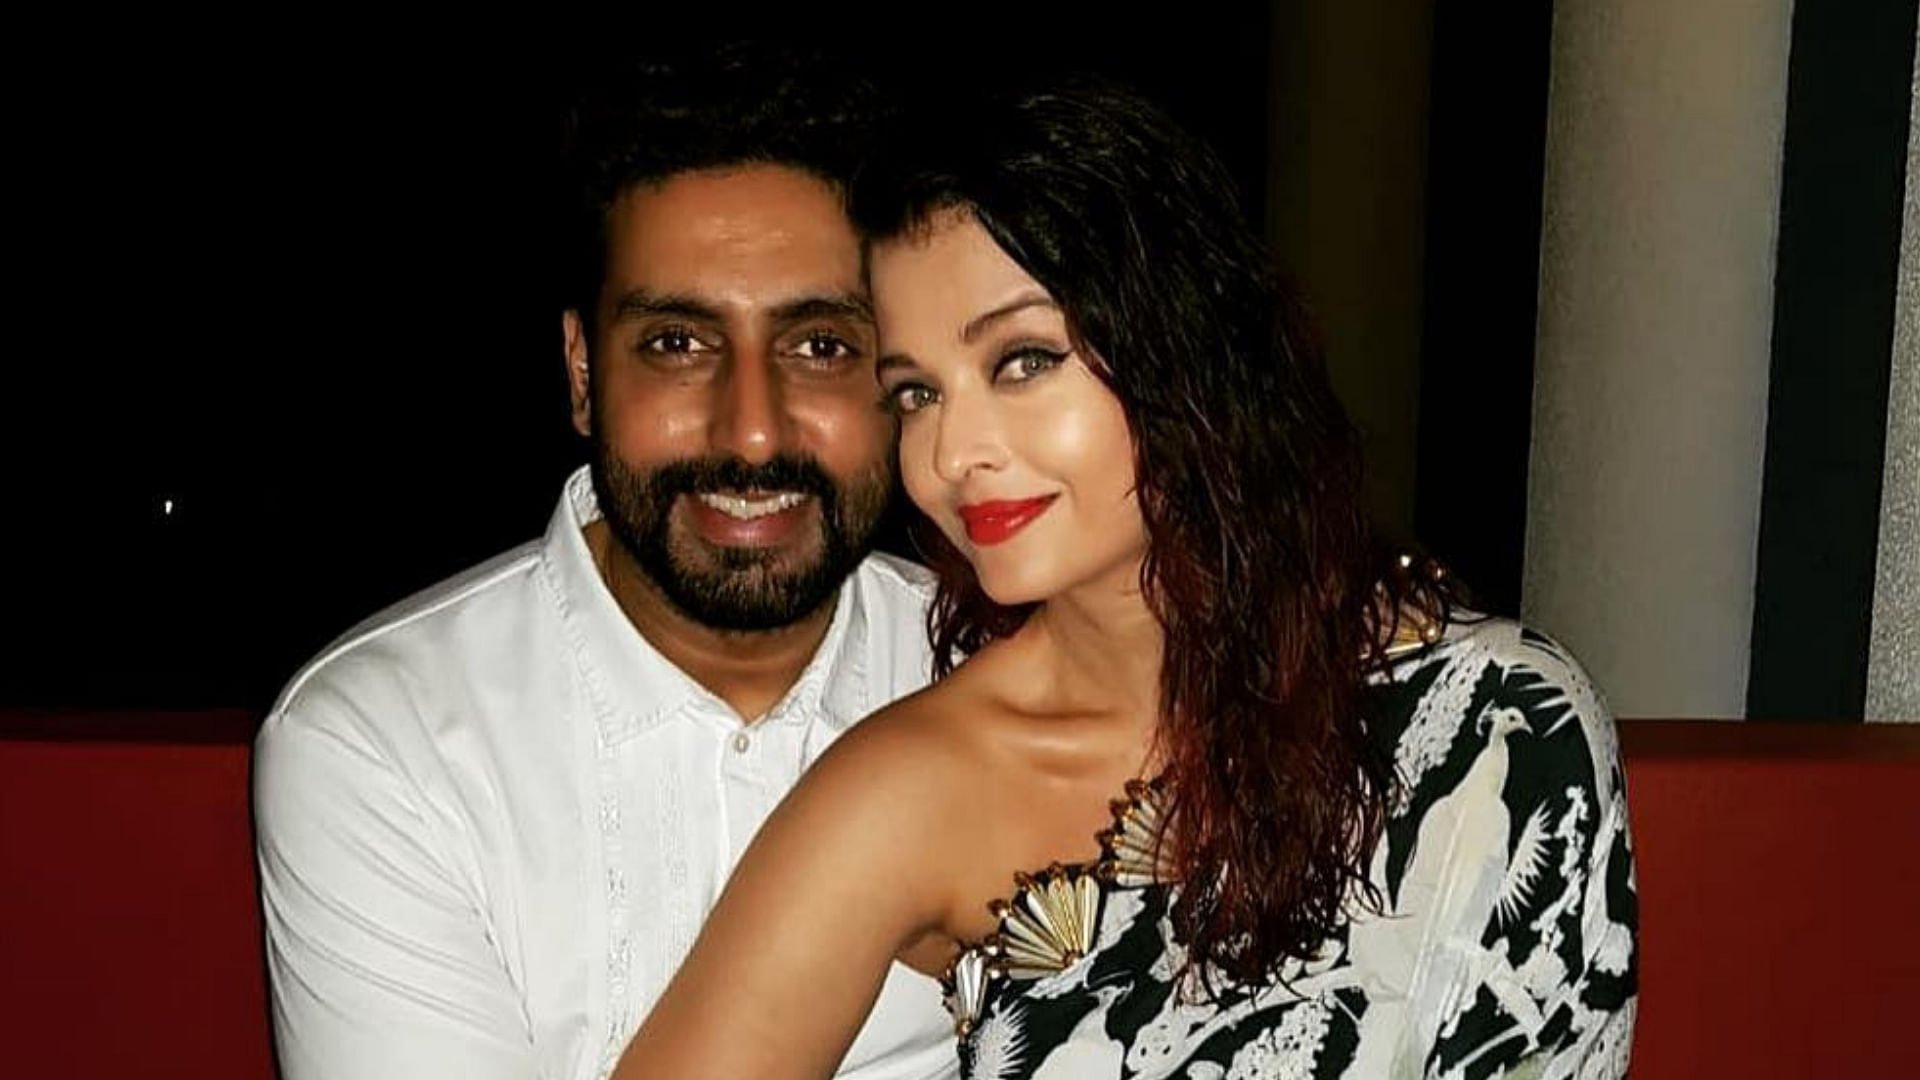 Abhishek Bachchan poses with wife Aishwarya Rai Bachchan.